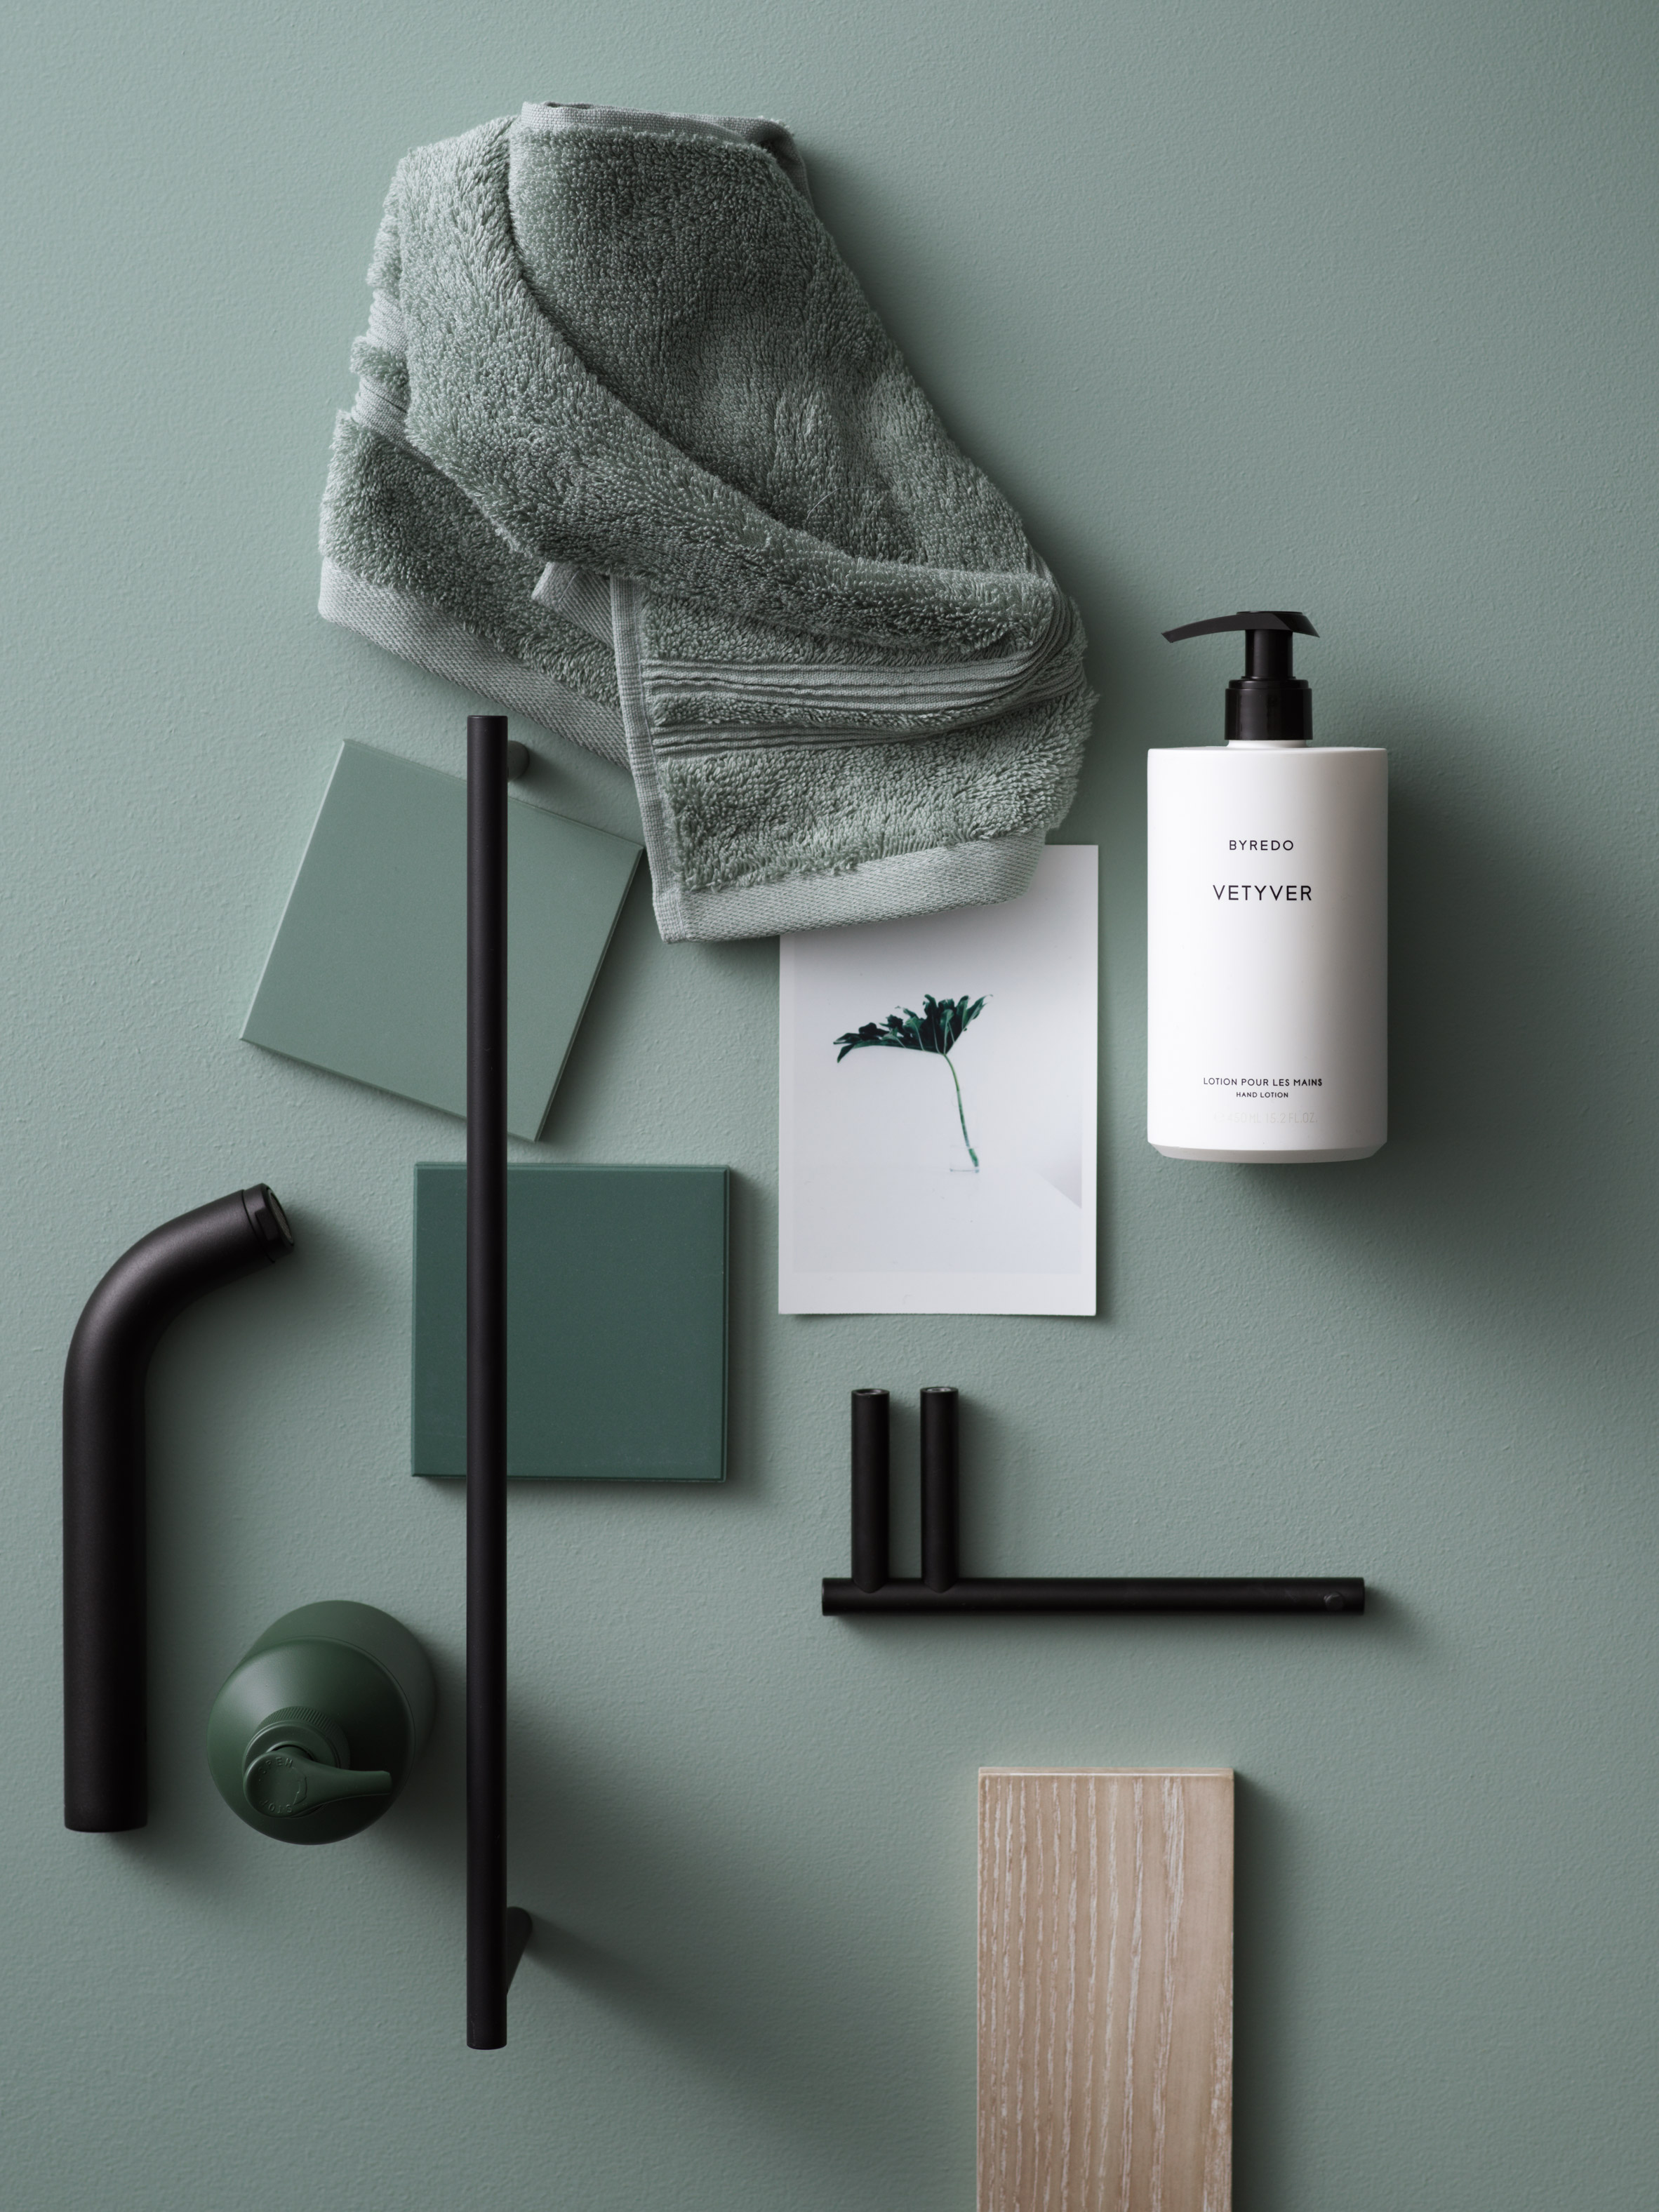 Note Design Studio create compact bathroom furniture for Lagom